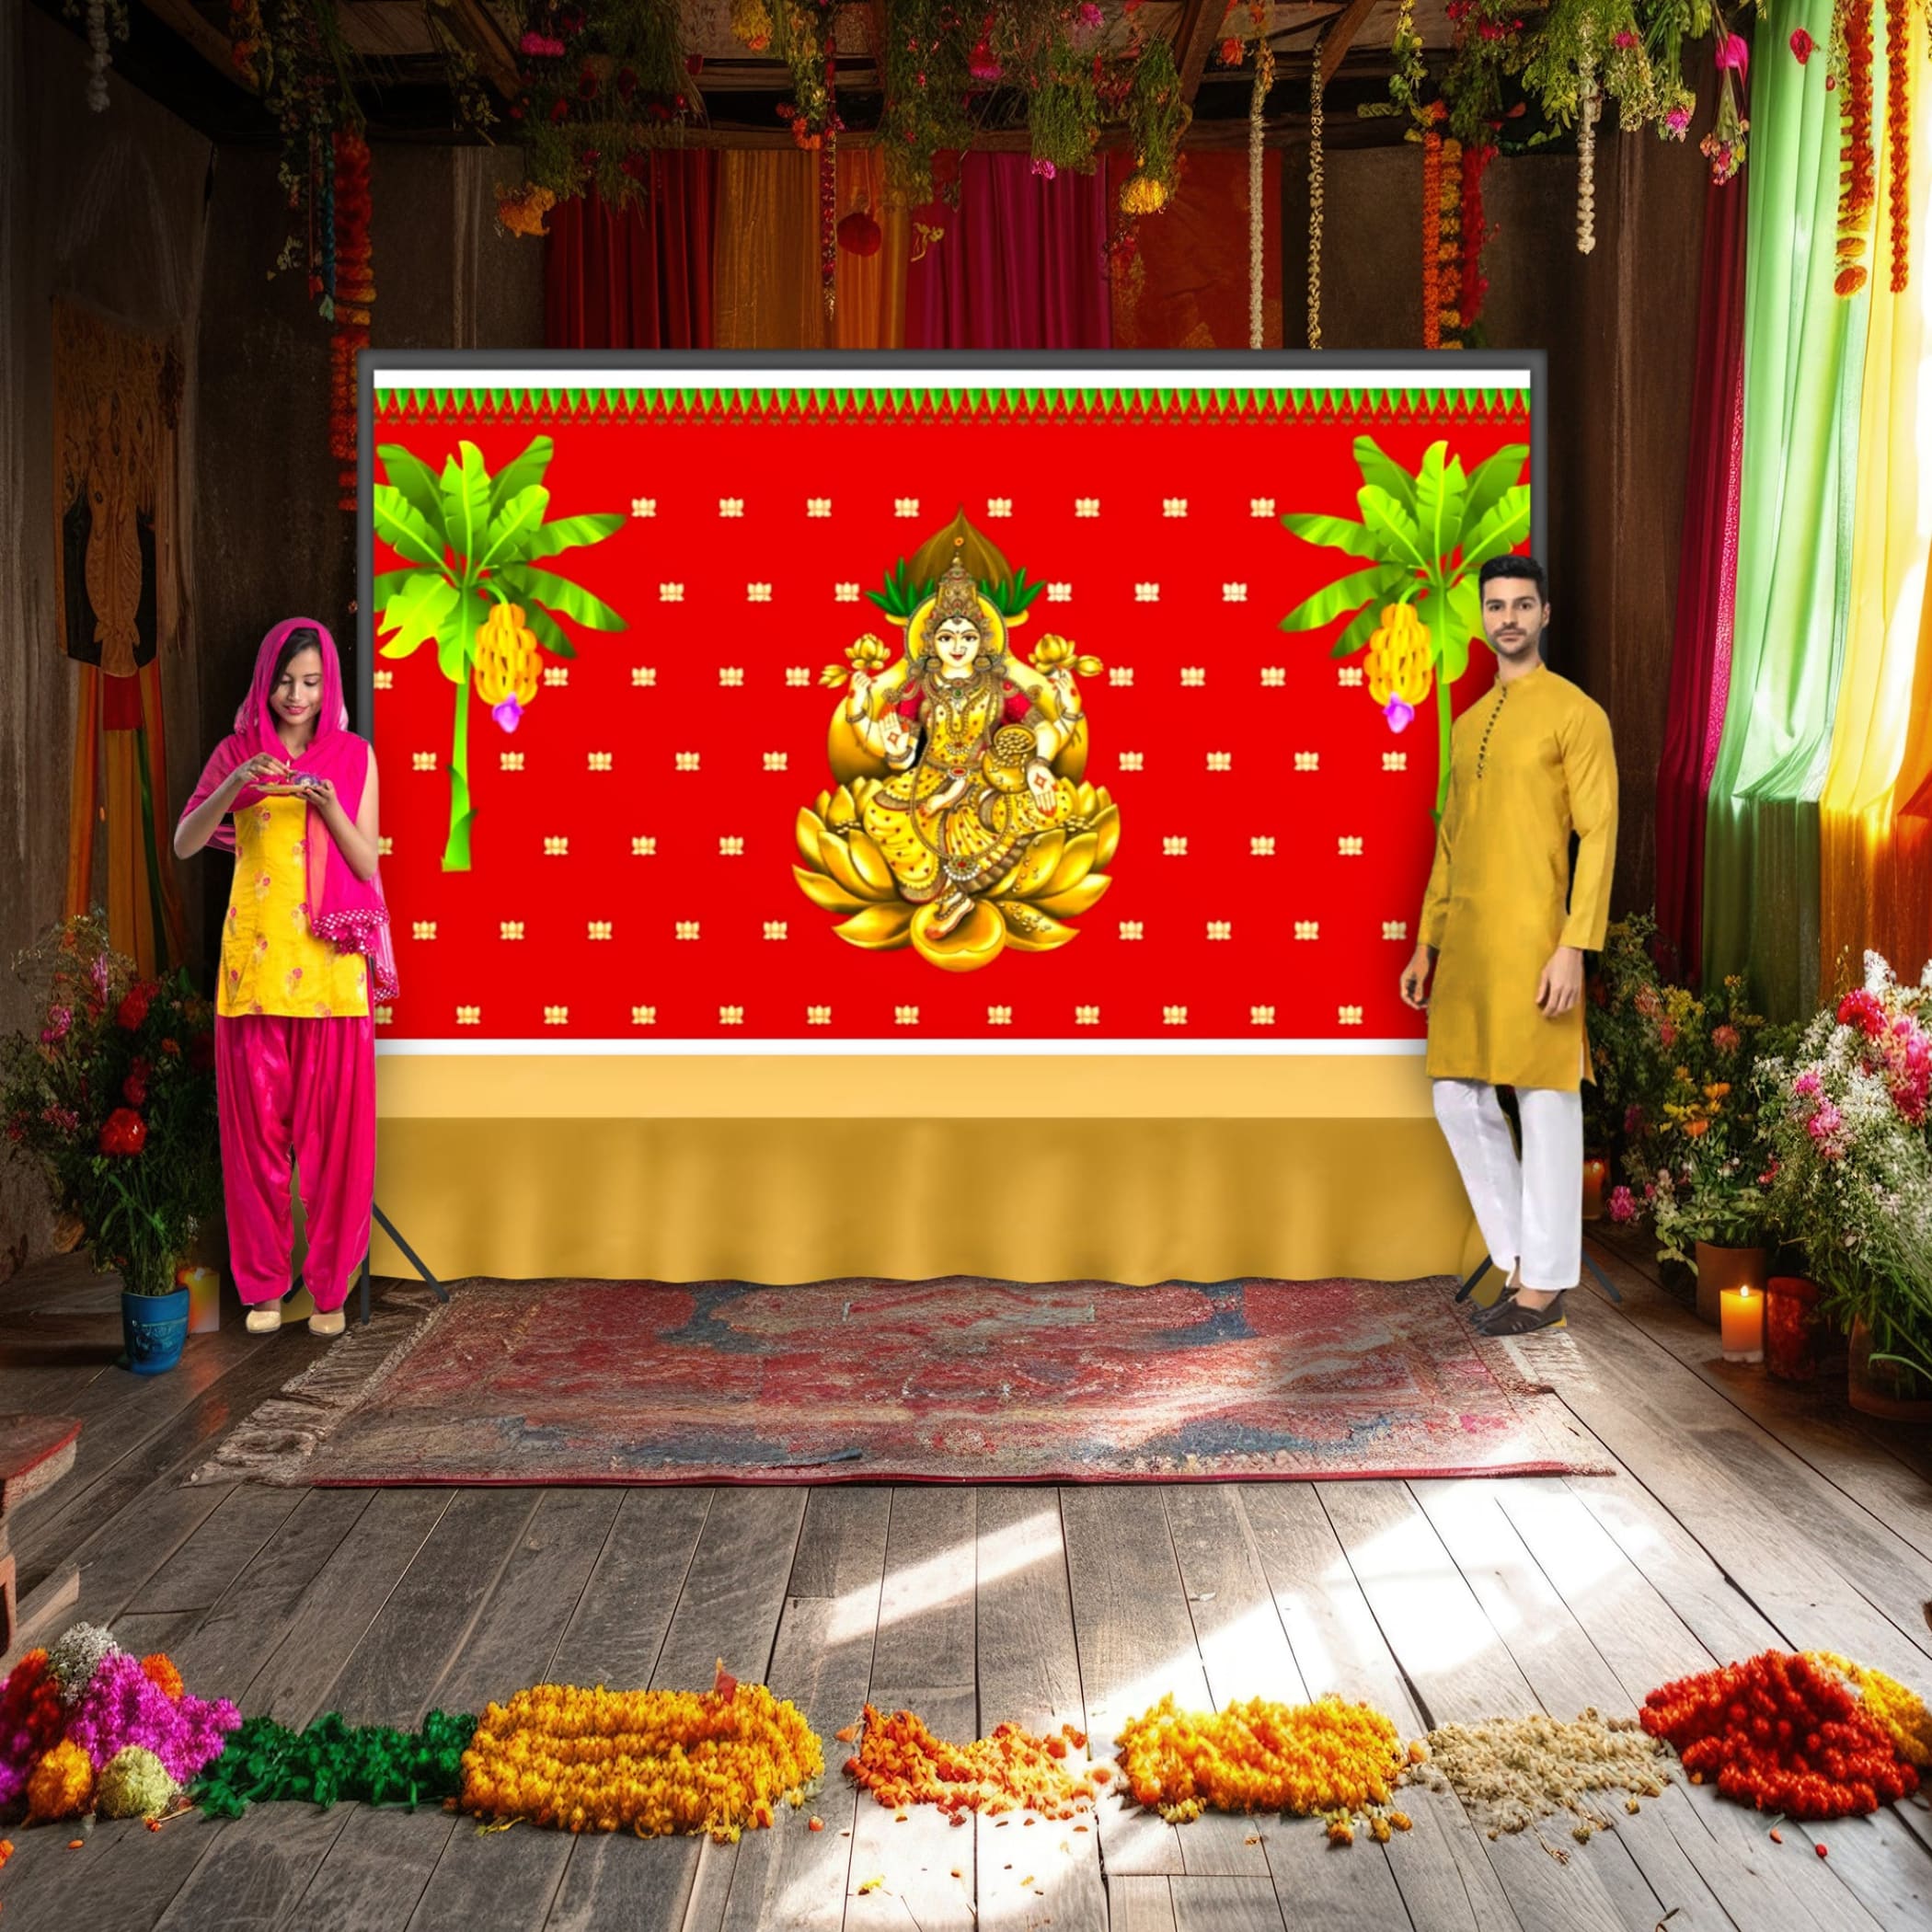 Goddess laxmi backdrop 5x8 feet indian traditional cloth